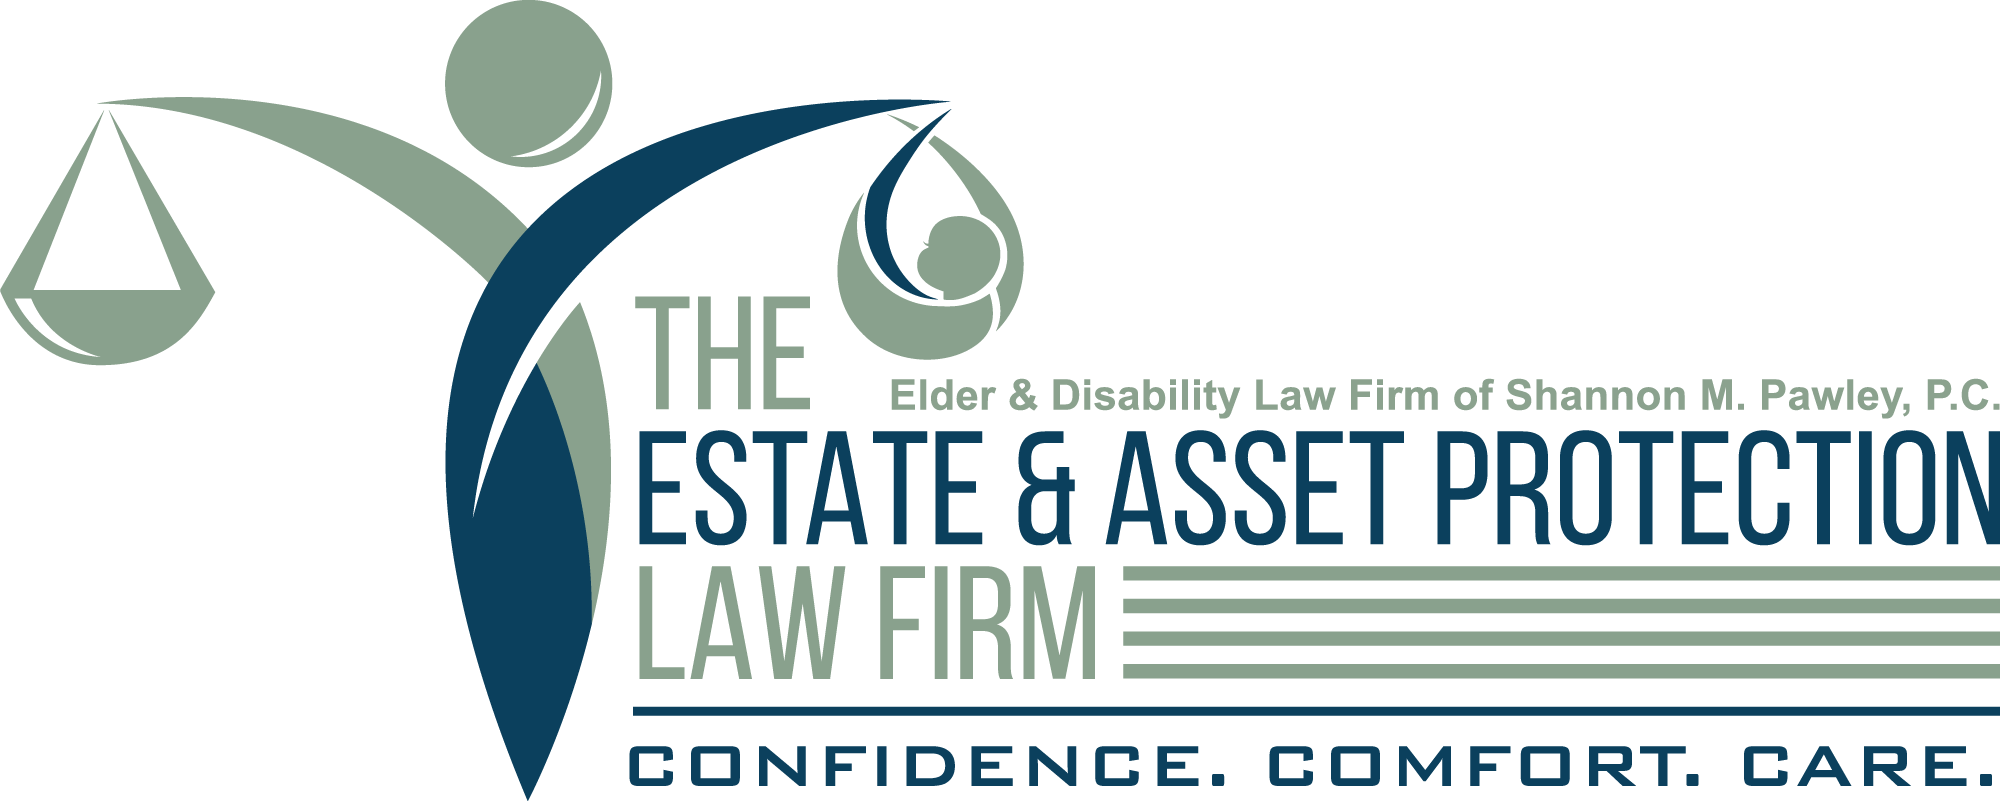 Image of Medicaid long term care plans filial law estate planning elder care asset protection aging parents  on estate management asset protection law site